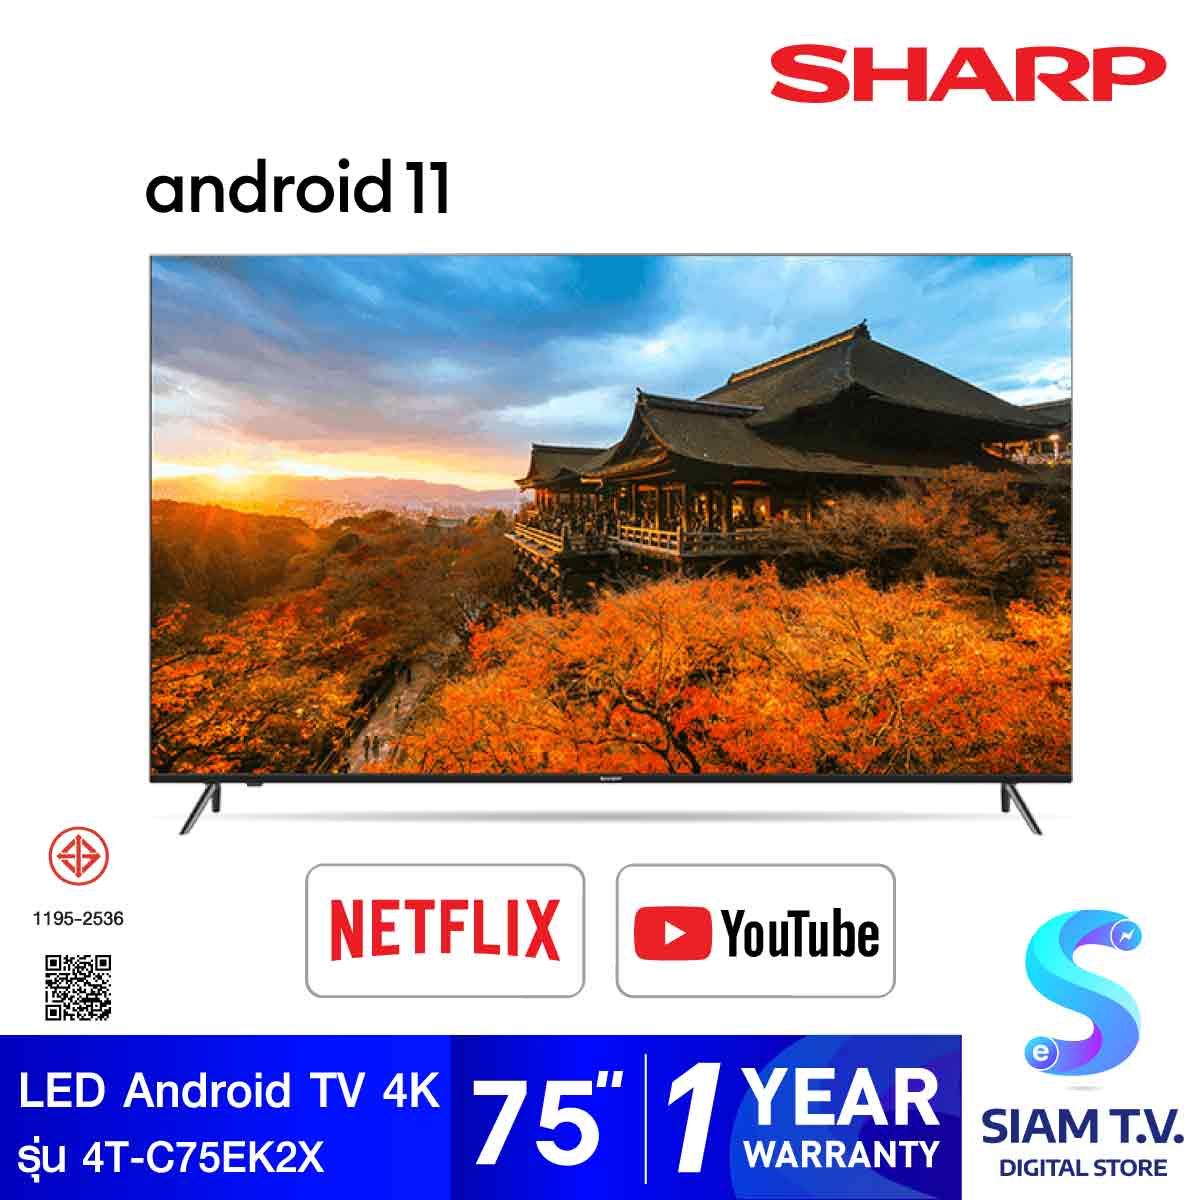 SHARP LED Android TV 4K รุ่น 4T-C75EK2X  Android11 สมาร์ททีวีขนาด 75 นิ้ว